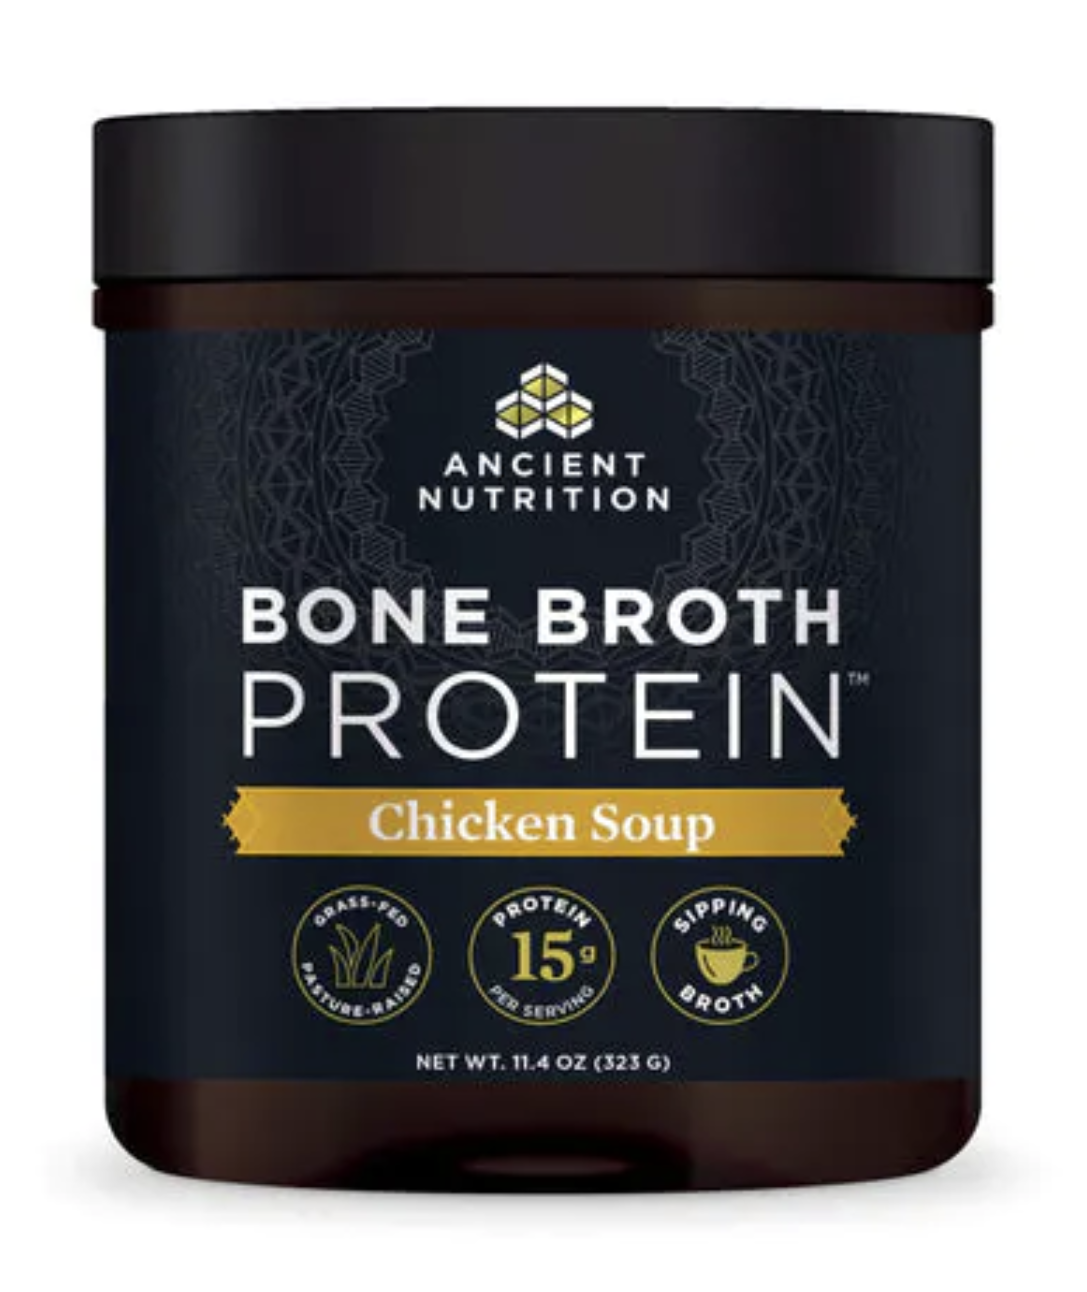 Ancient Nutrition Bone Broth Protein Chicken Soup 11.4oz